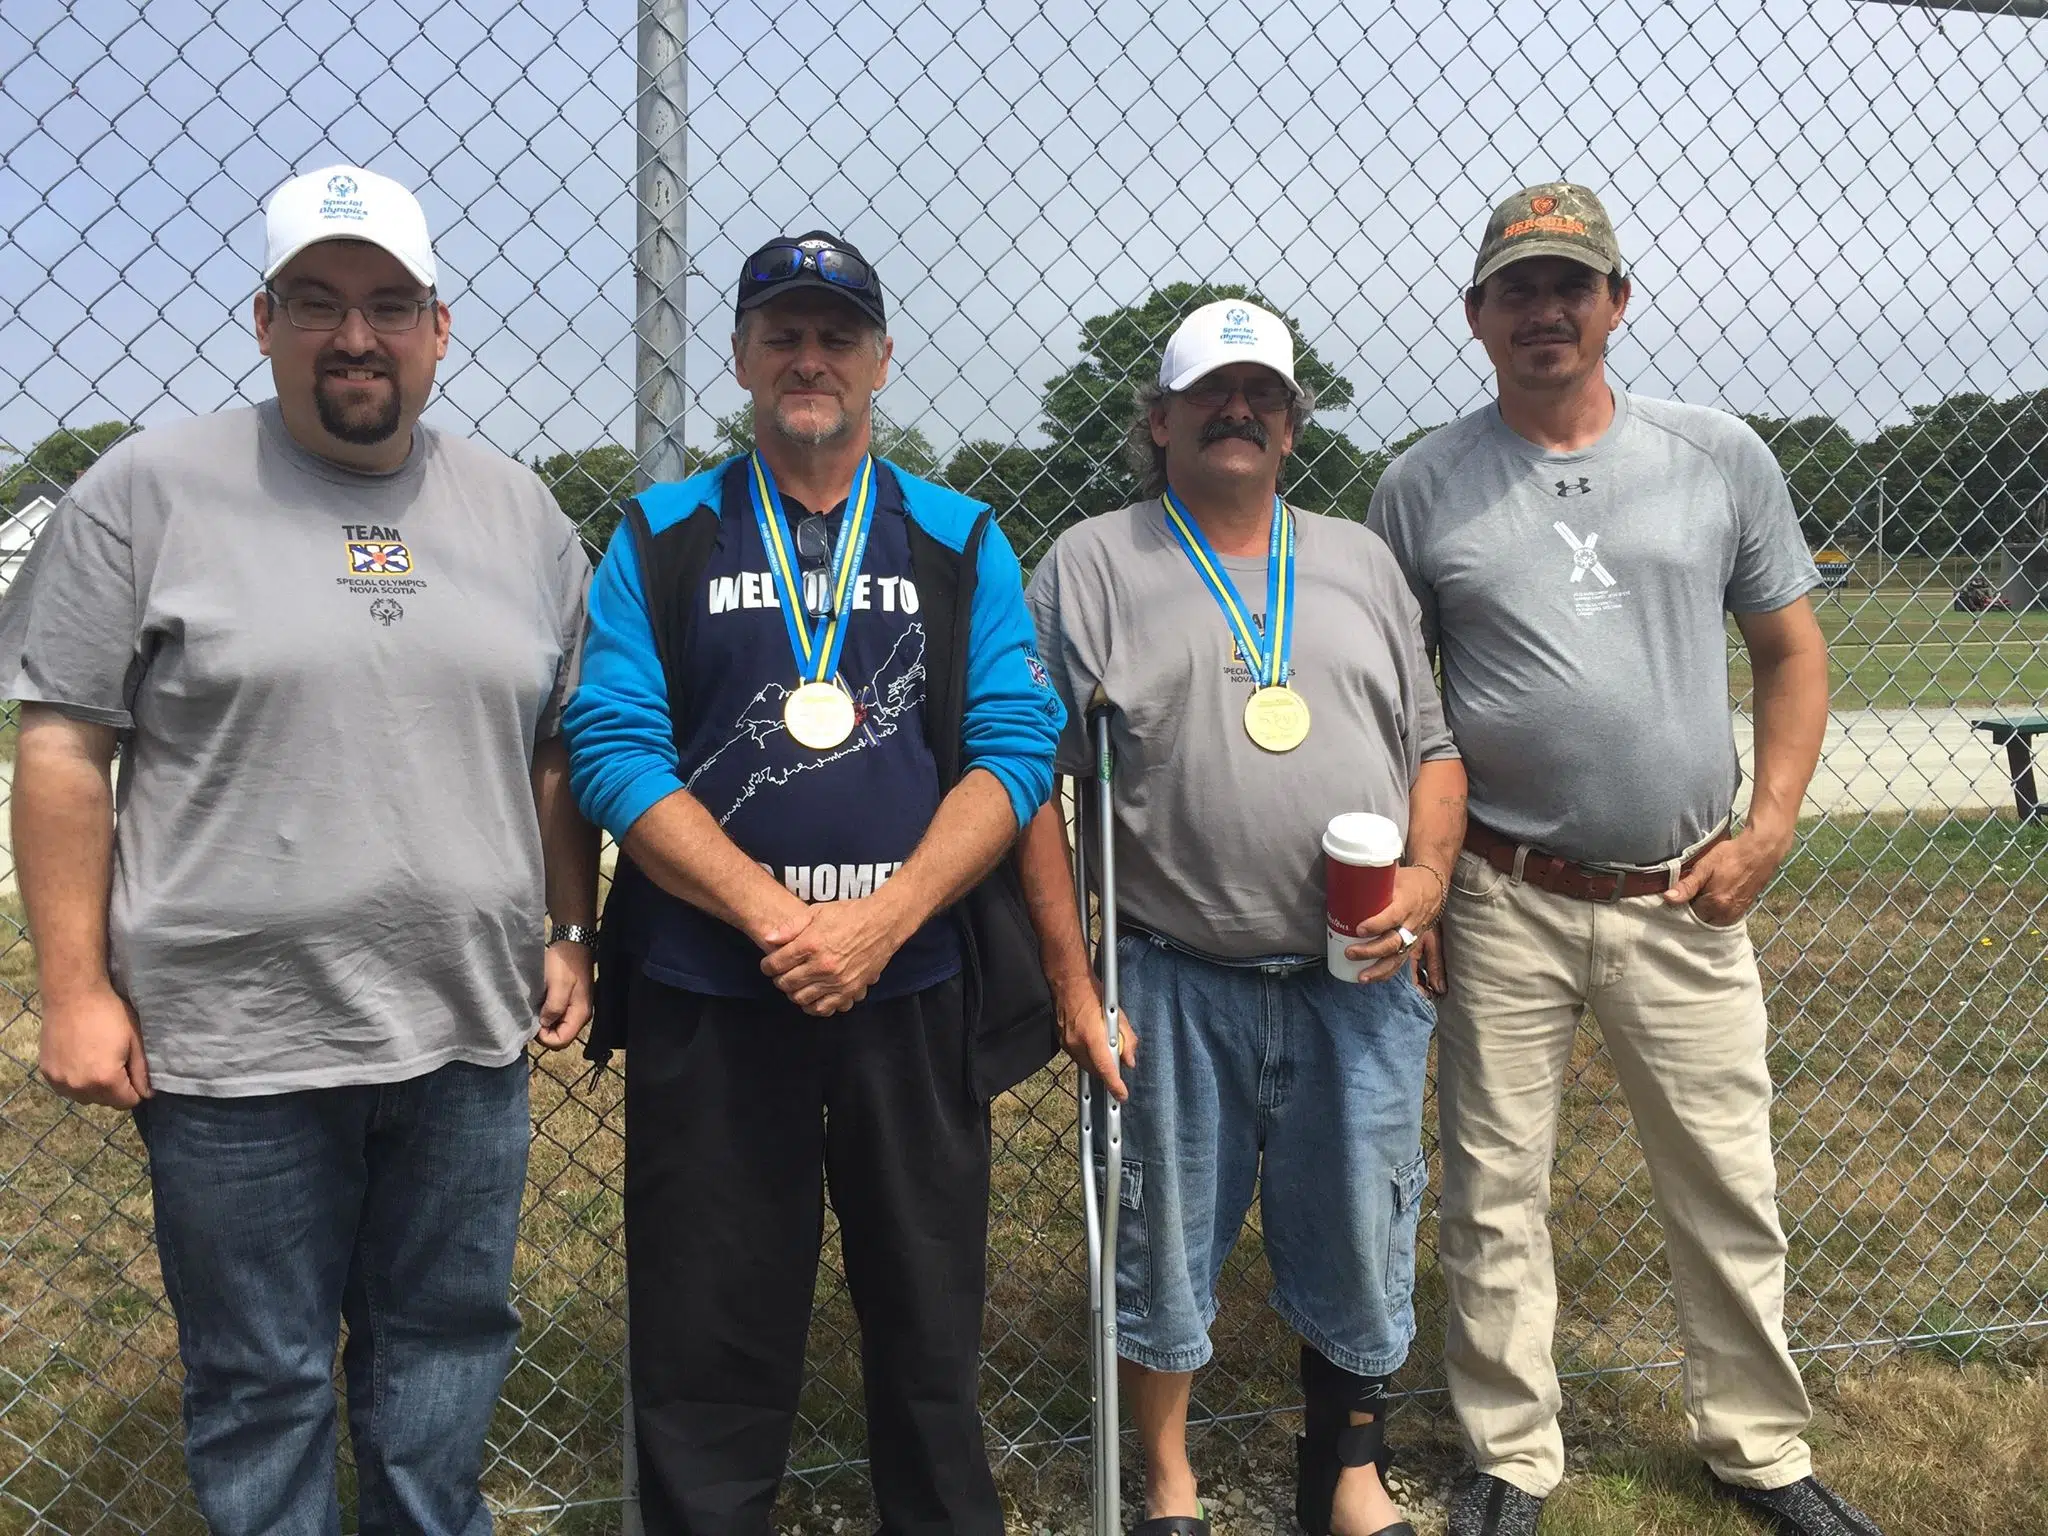 Yarmouth Softball Players Help Team Nova Scotia Win Special Olympics Gold